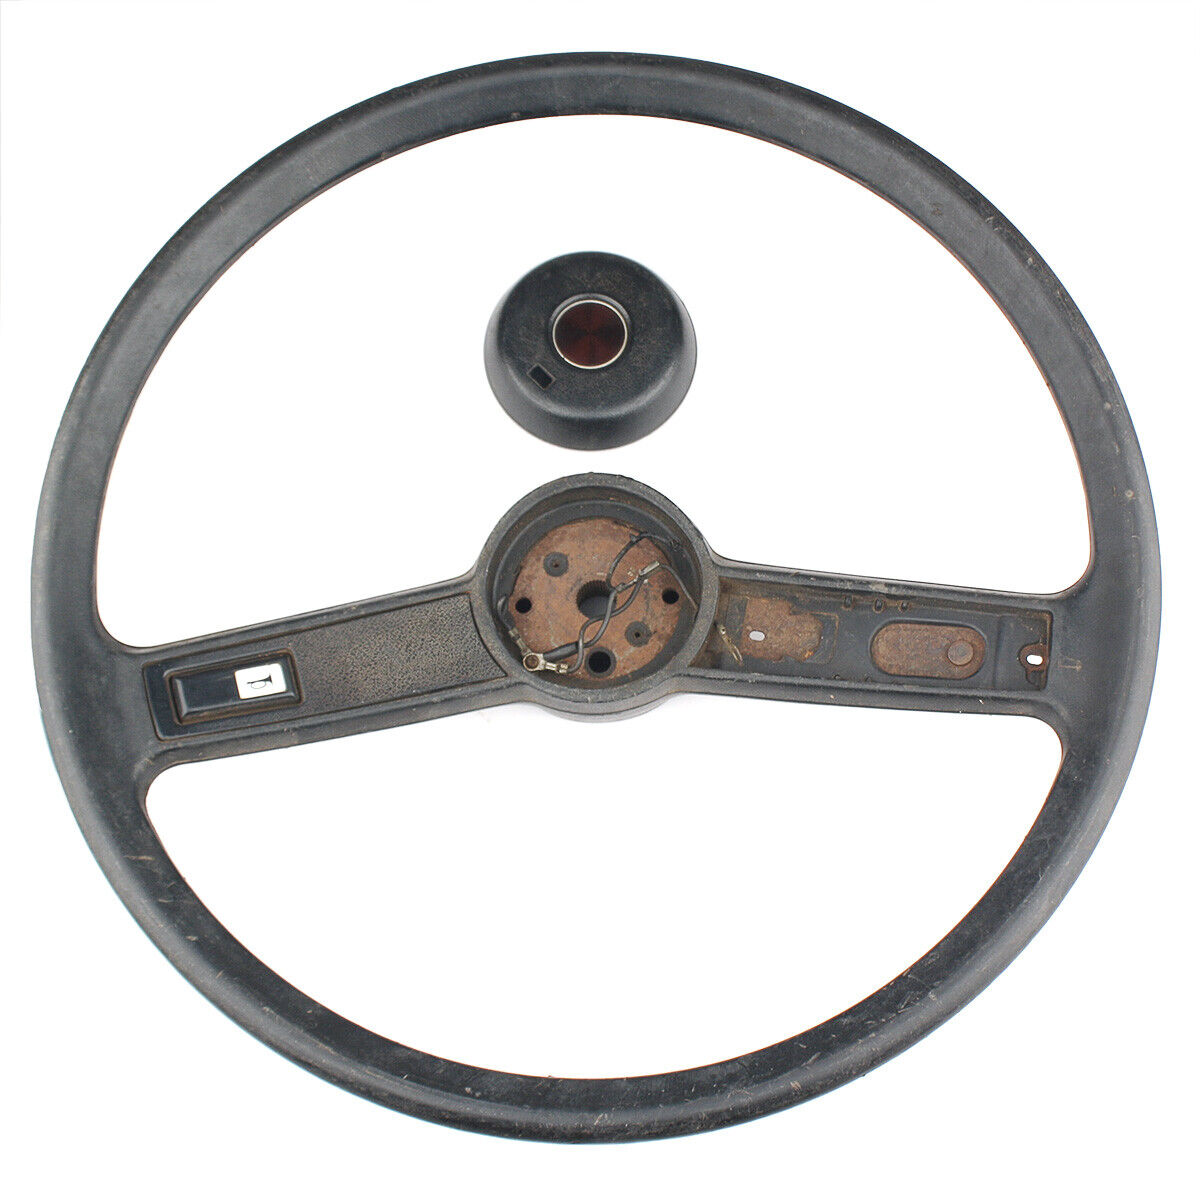 Daihatsu Taft F50 1974 – 1984 Steering Wheel NOS